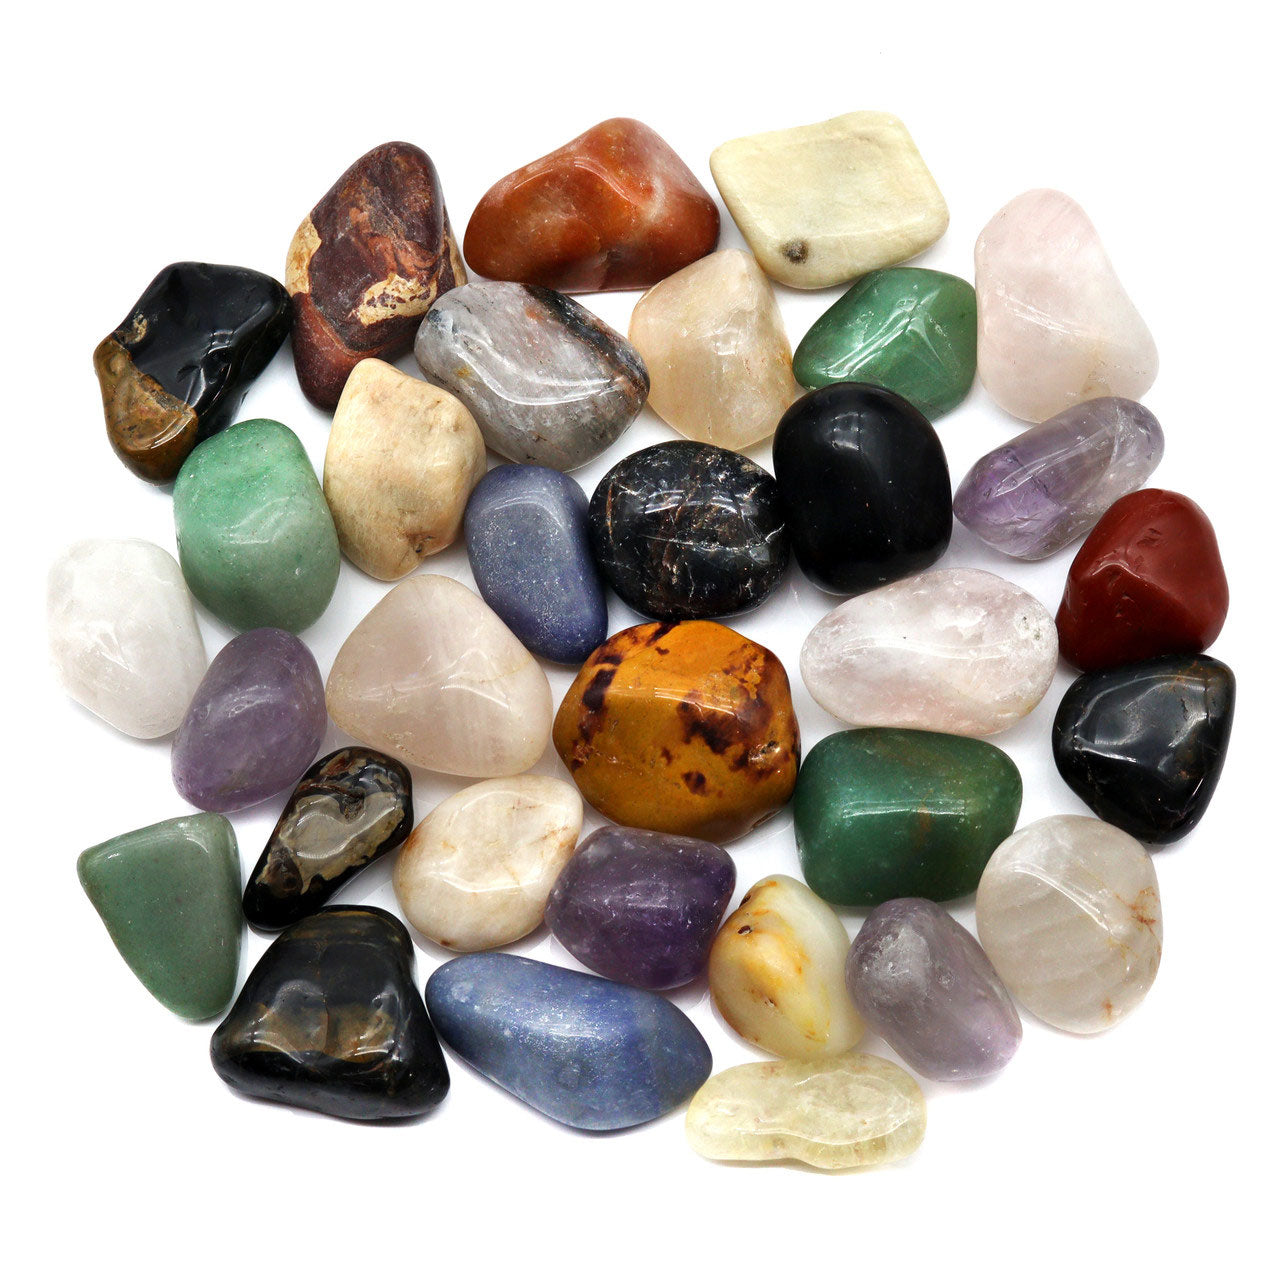 Mixed gemstones tumbled gemstones  / 1 lb. Lot - 30-50 mm avg